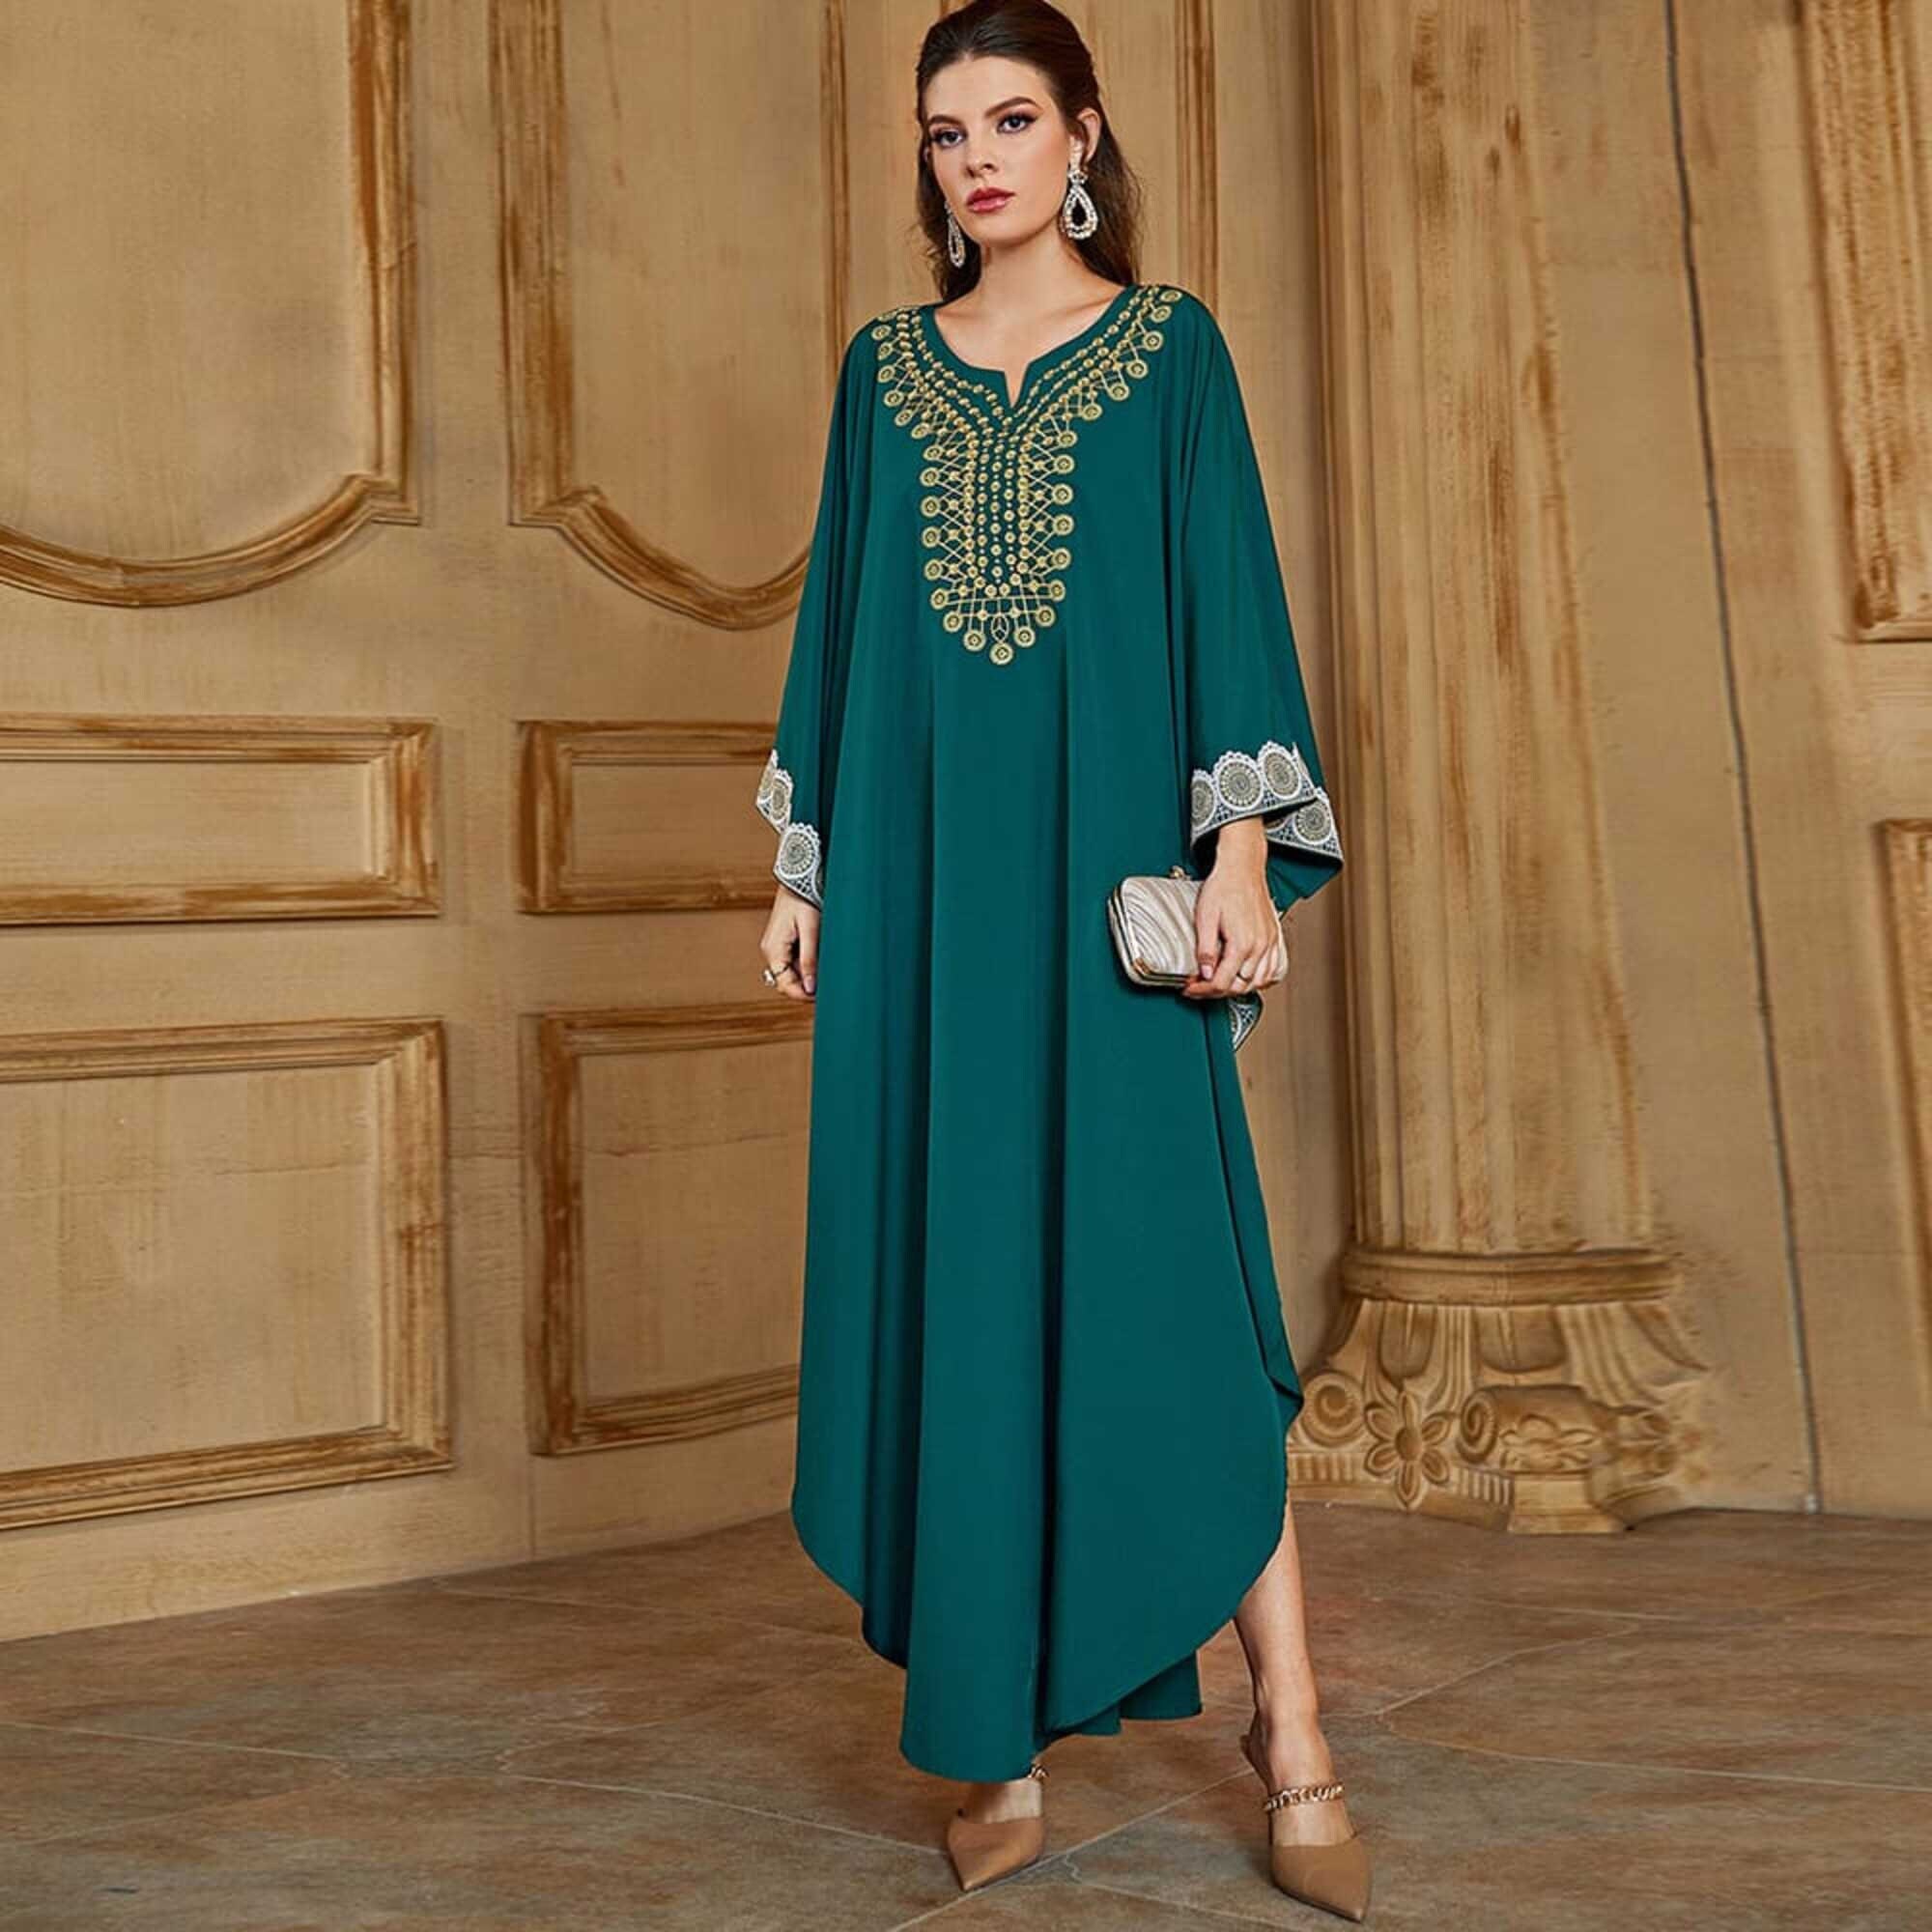 Gandoura Moroccan Standard Size Abaya Women's Clothing - Etsy